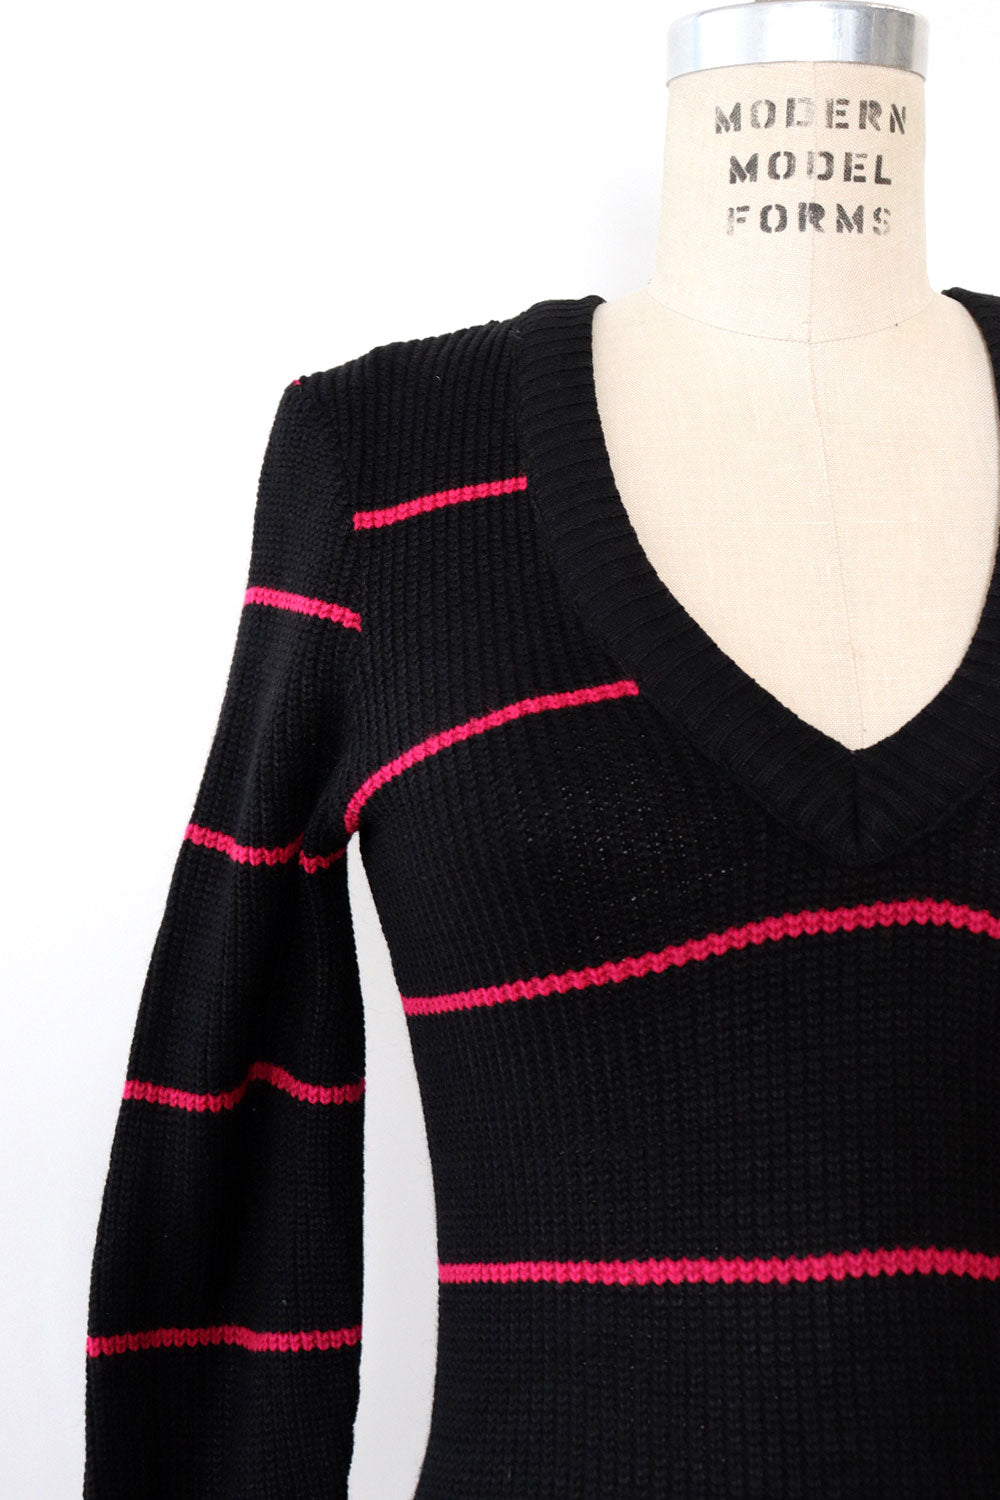 Vetalia Striped Sweaterdress M